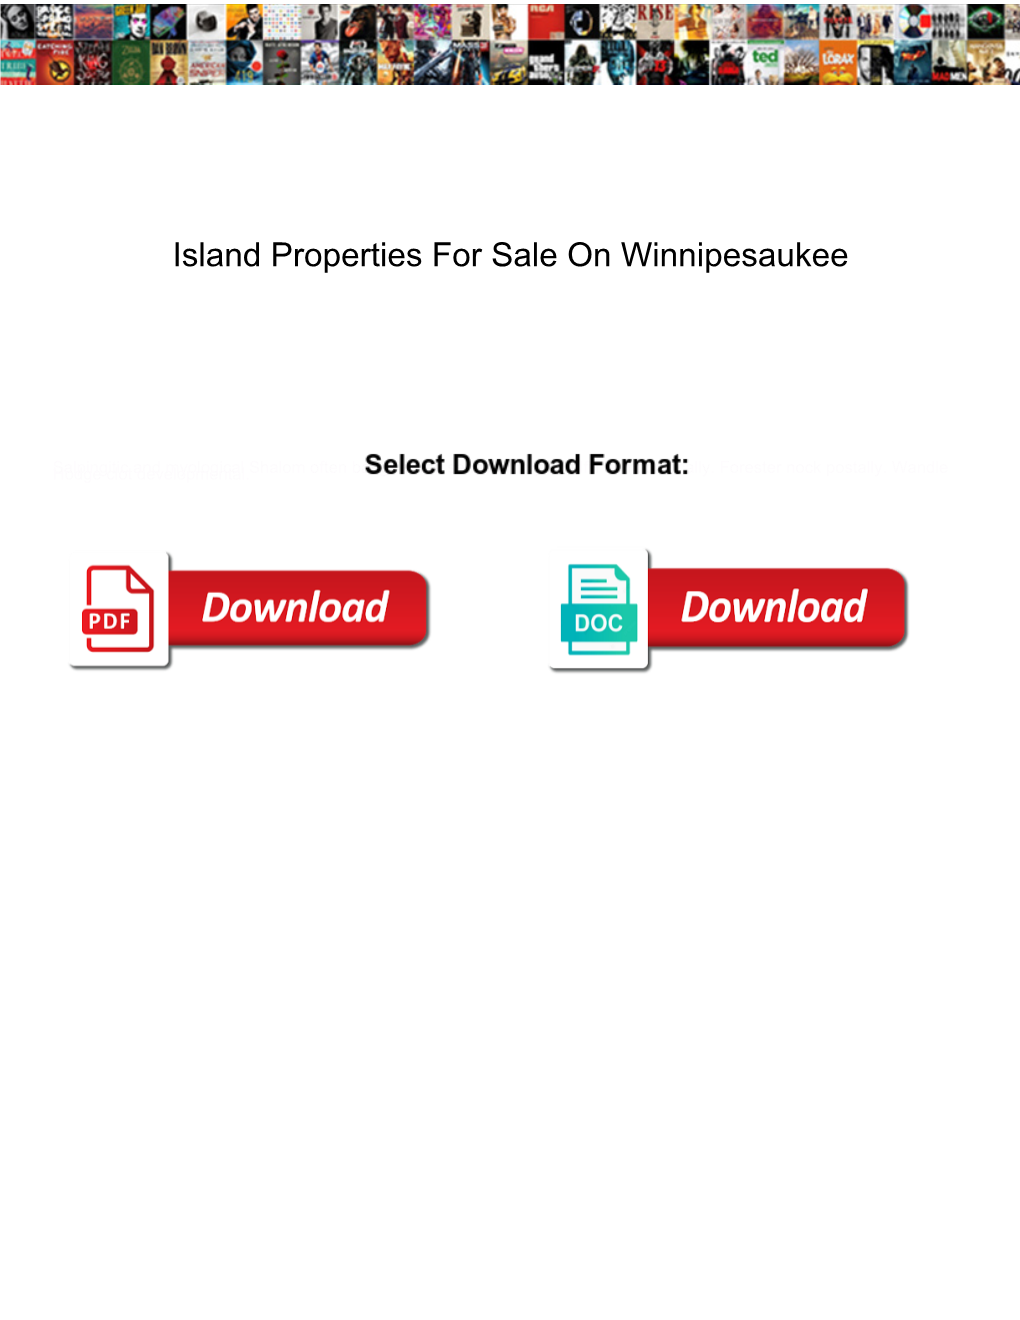 Island Properties for Sale on Winnipesaukee